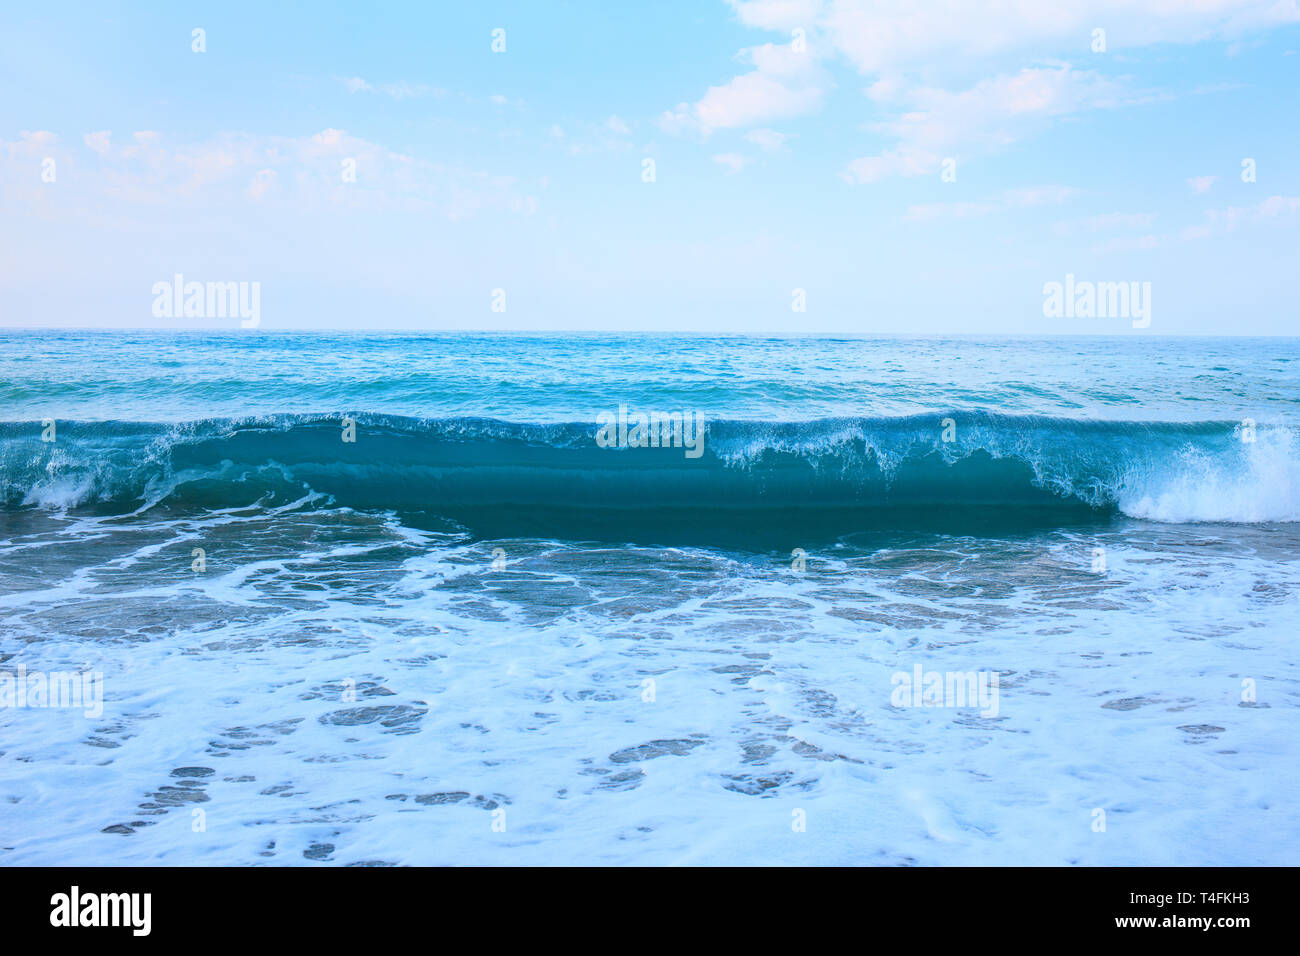 Bellissima vista di schizzi onde blu vicino alla spiaggia. Foto Stock